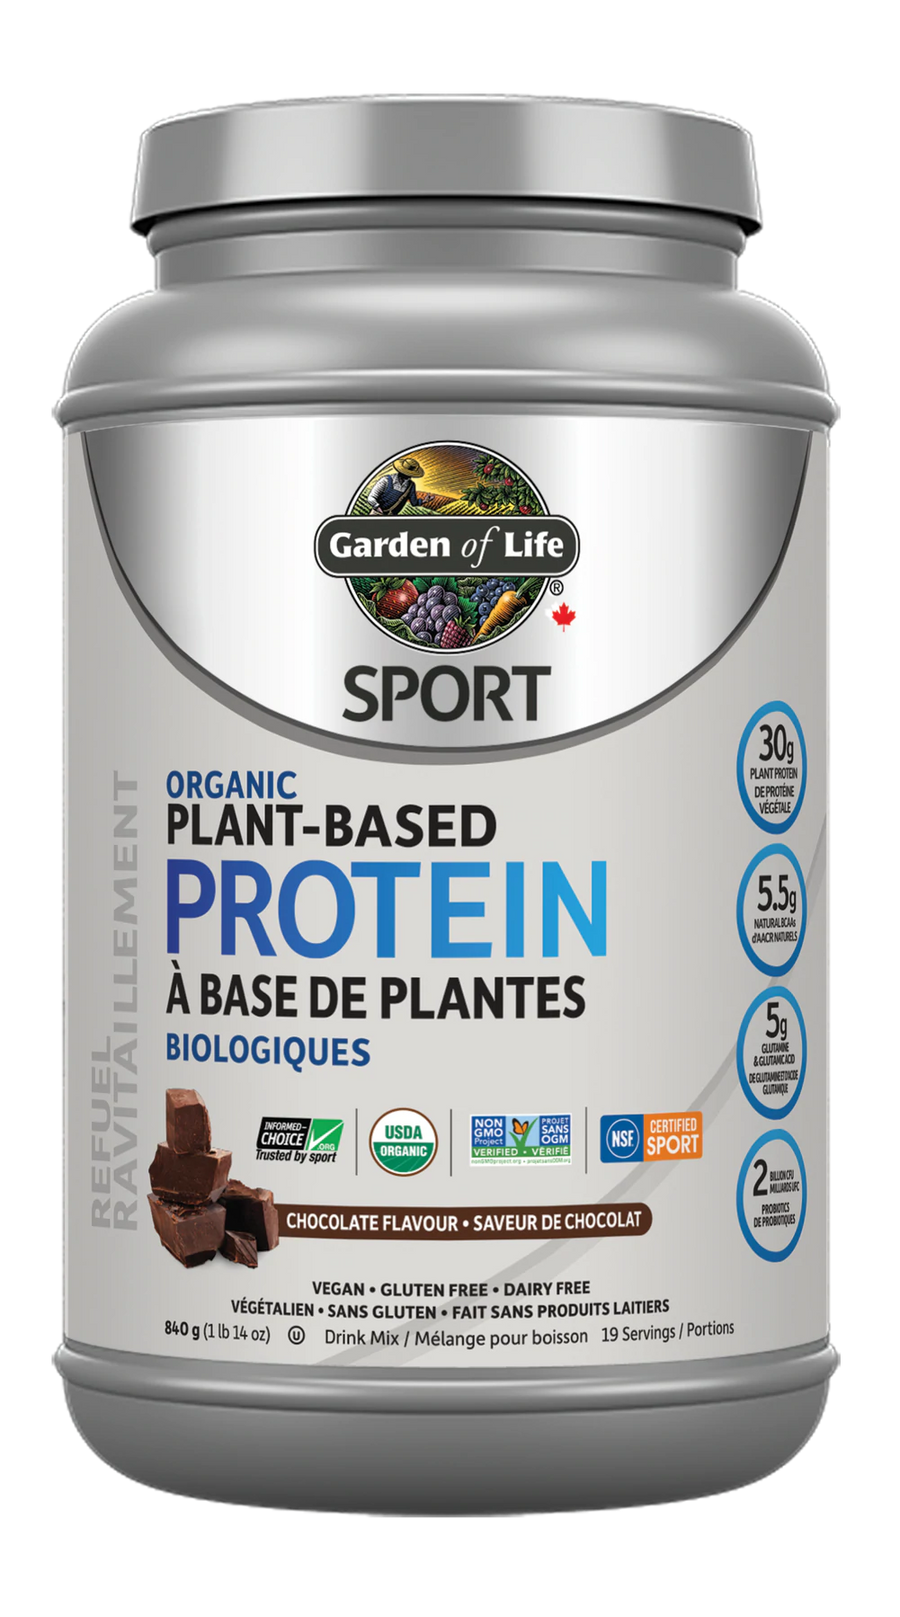 Garden of Life - Sports - Organic Plant-Based Protein Powder